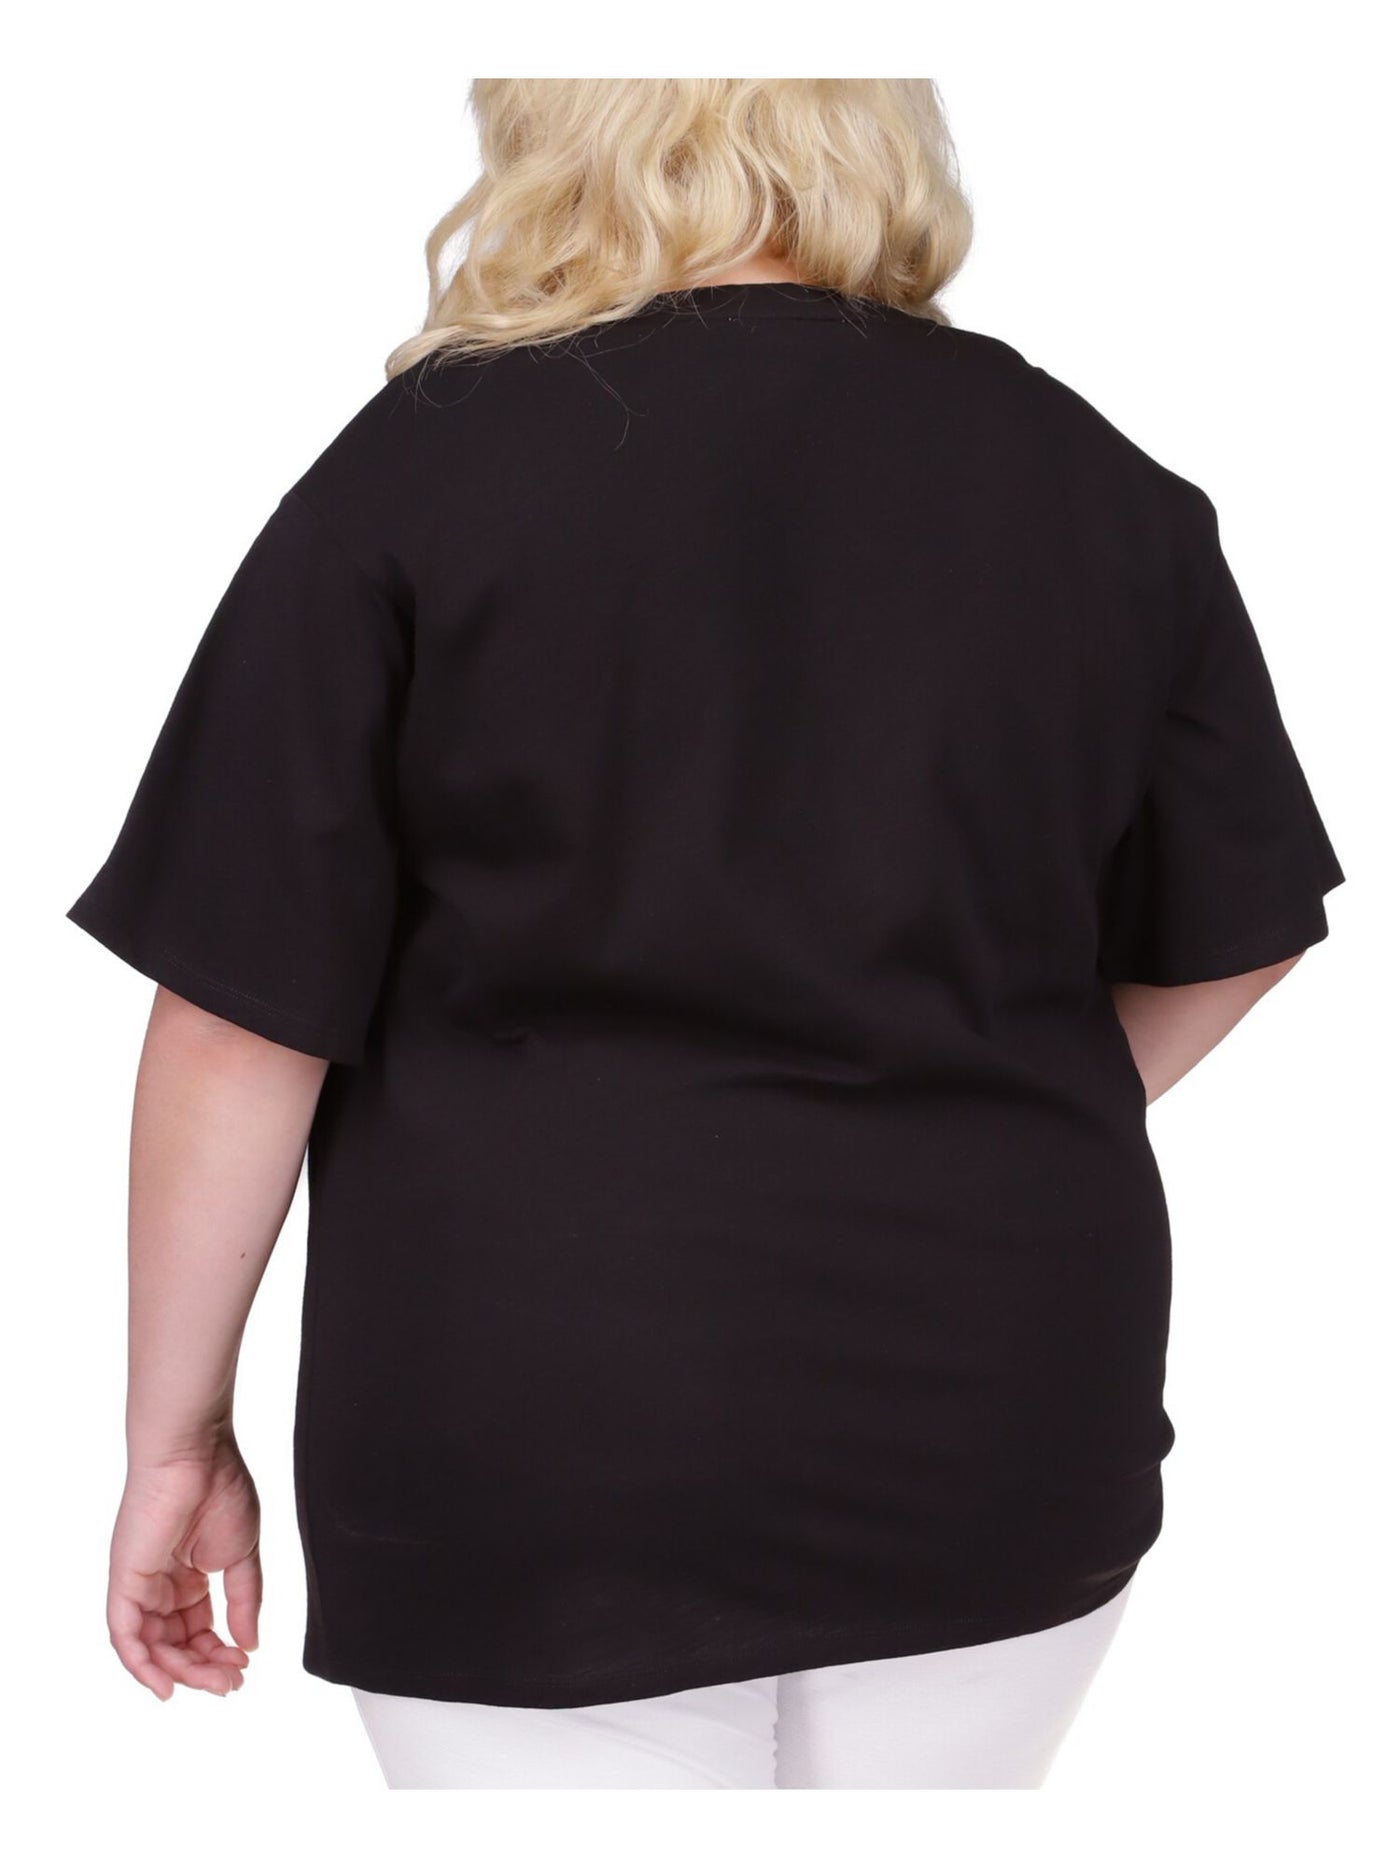 MICHAEL KORS Womens Black Elbow Sleeve Crew Neck T-Shirt Plus 1X